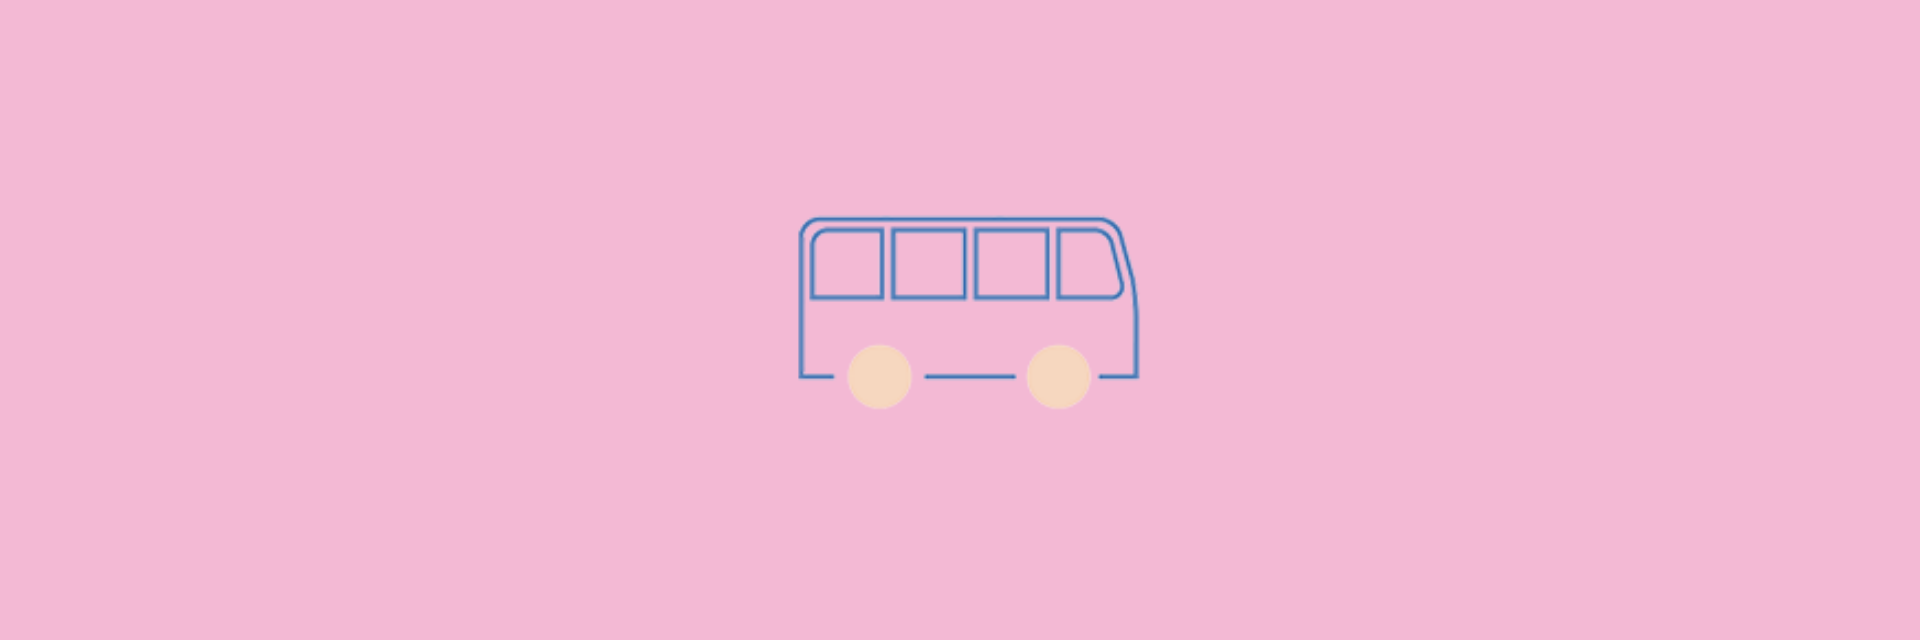 Linee bus